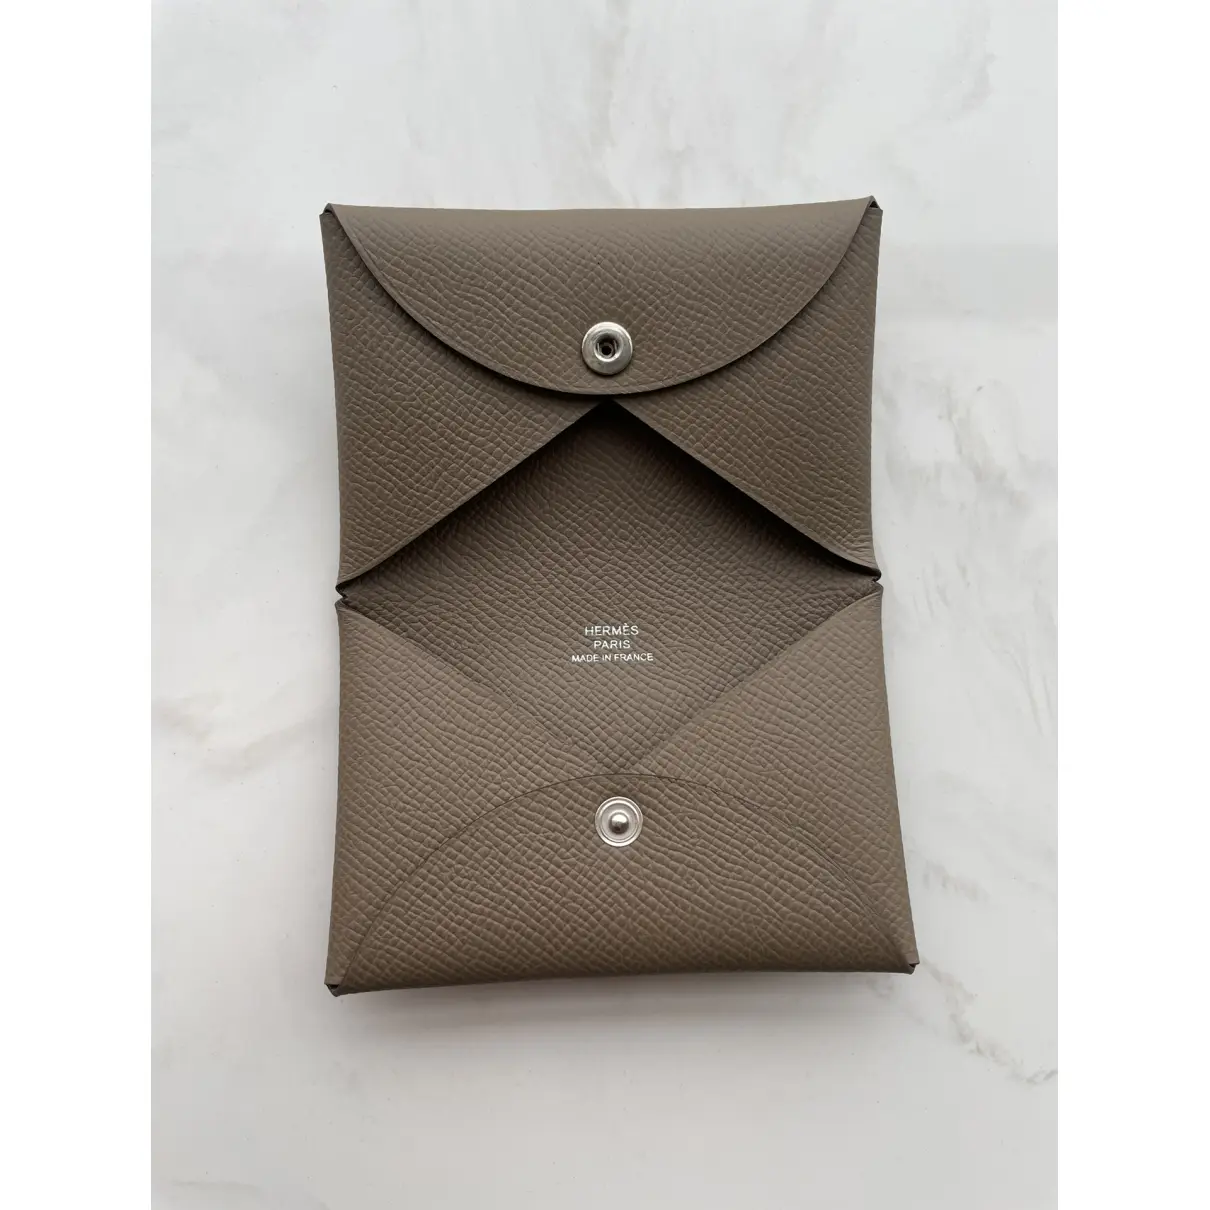 Buy Hermès Calvi leather small bag online